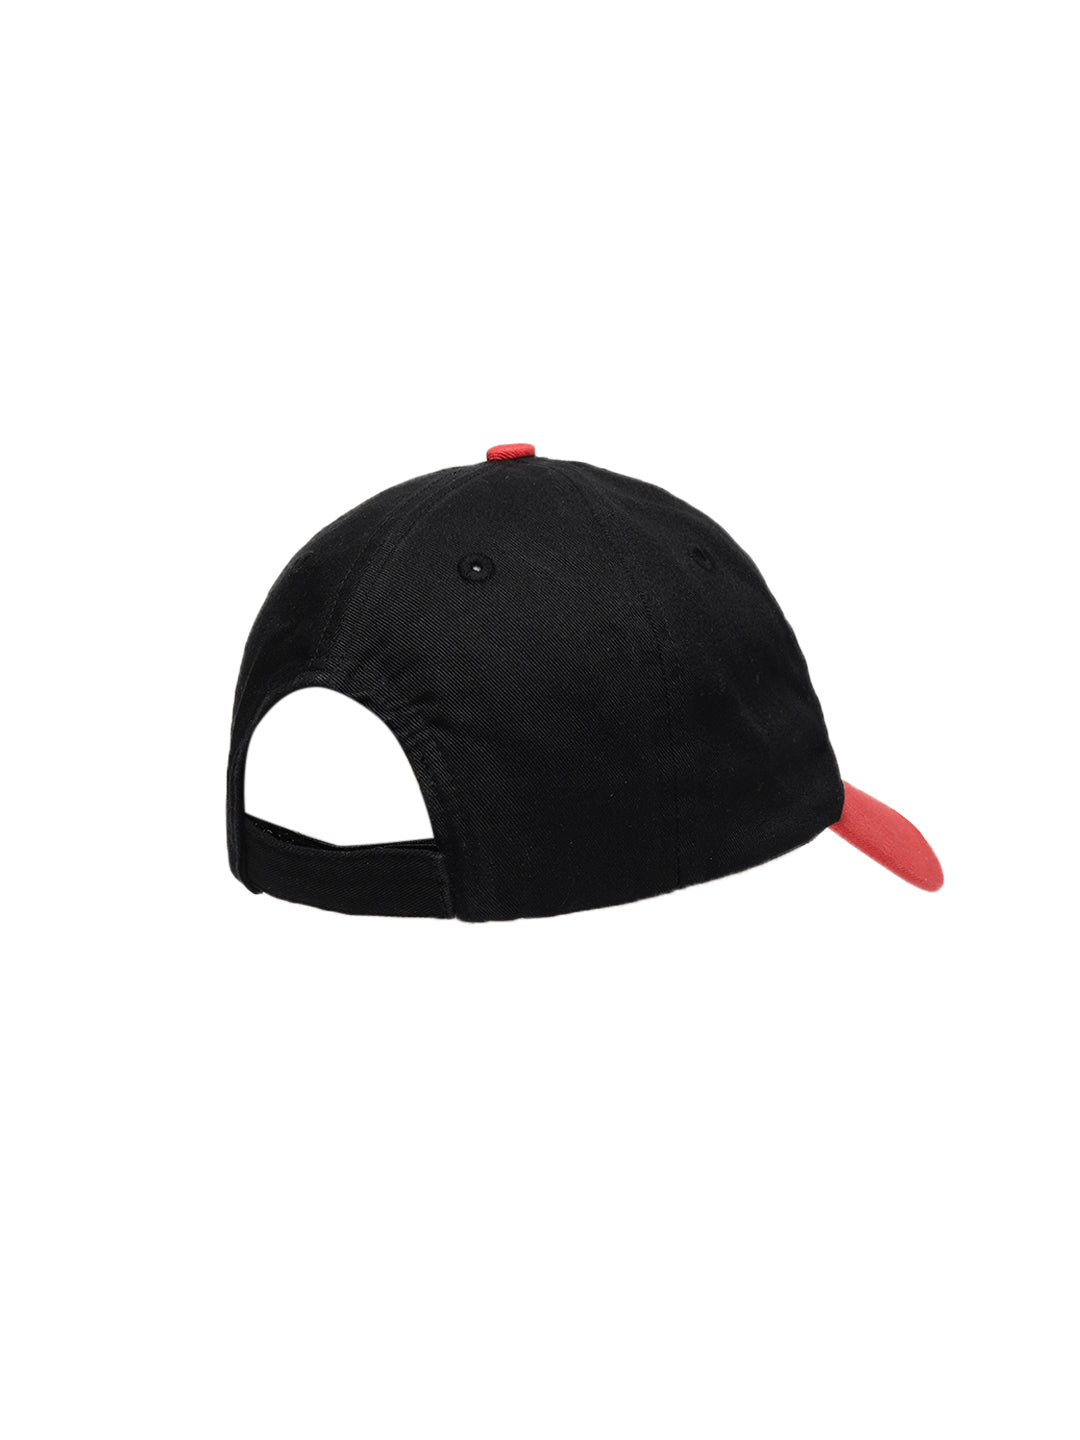 Distressed Red Baseball Cap